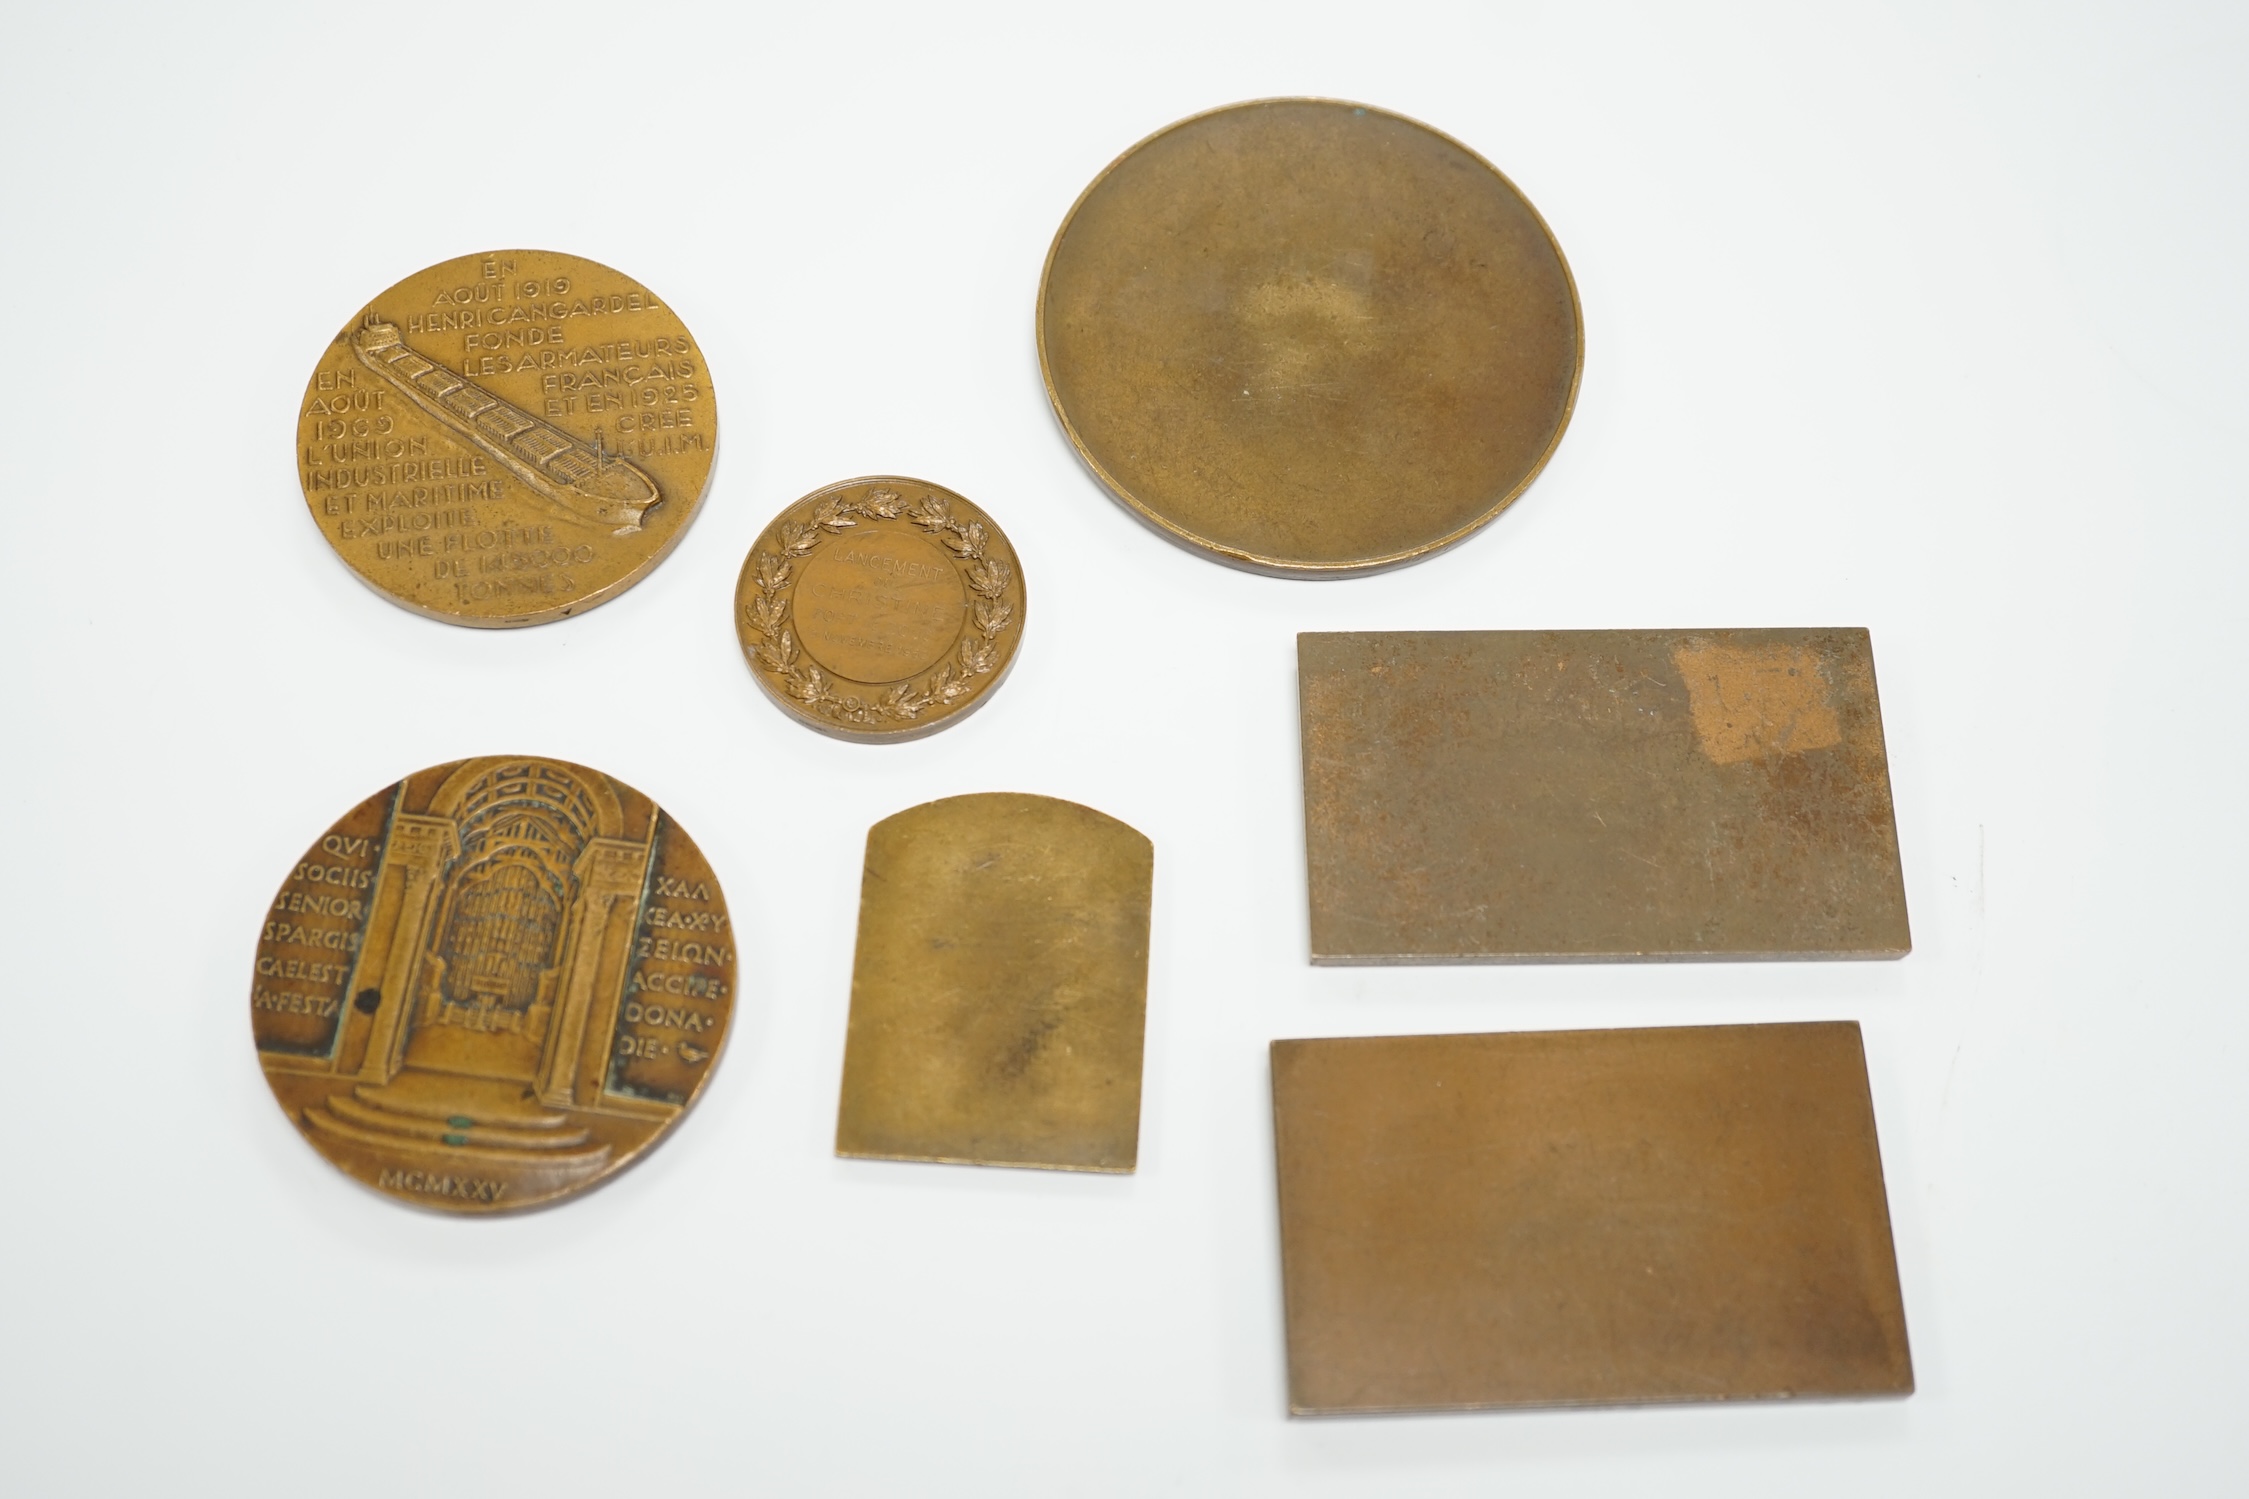 Seven bronze medallions, including awards and commemorative pieces; A.H. Johnson, Henri Cangardel, Albert Thomas, etc., largest 8 cm diameter